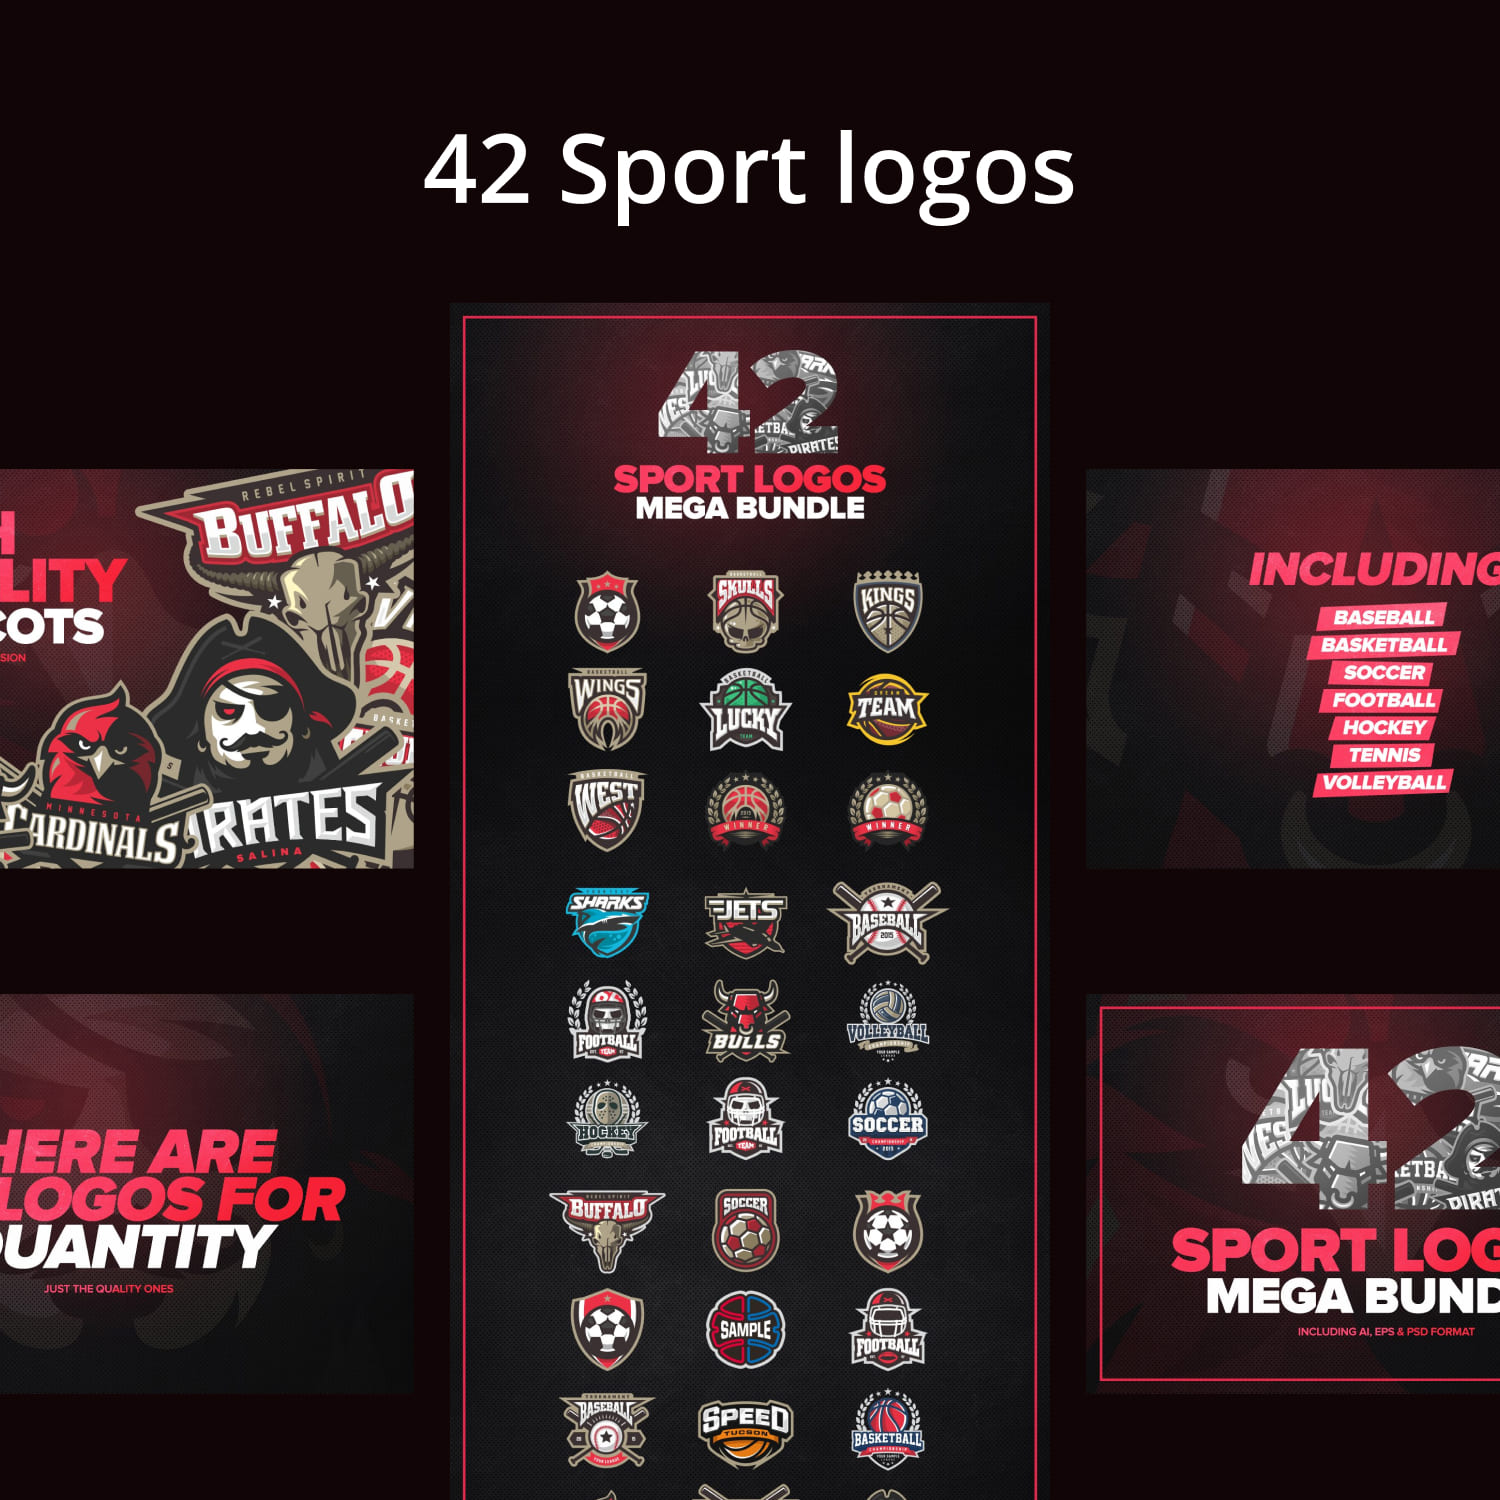 42 Sport logos MEGA BUNDLE.